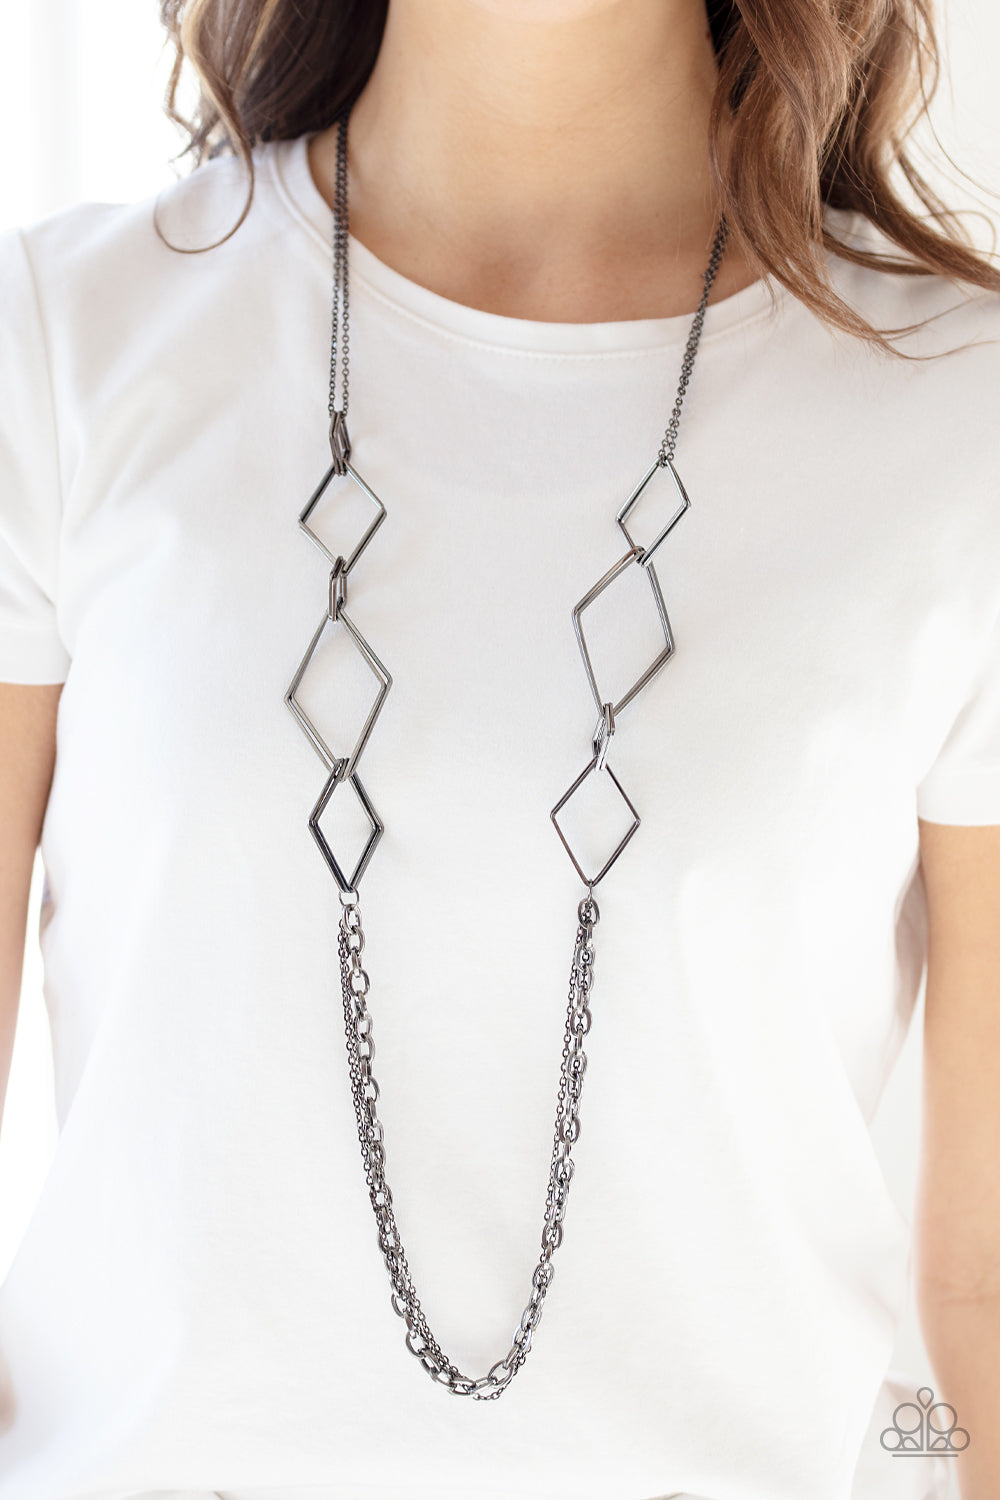 Fashion Fave - Black Necklace